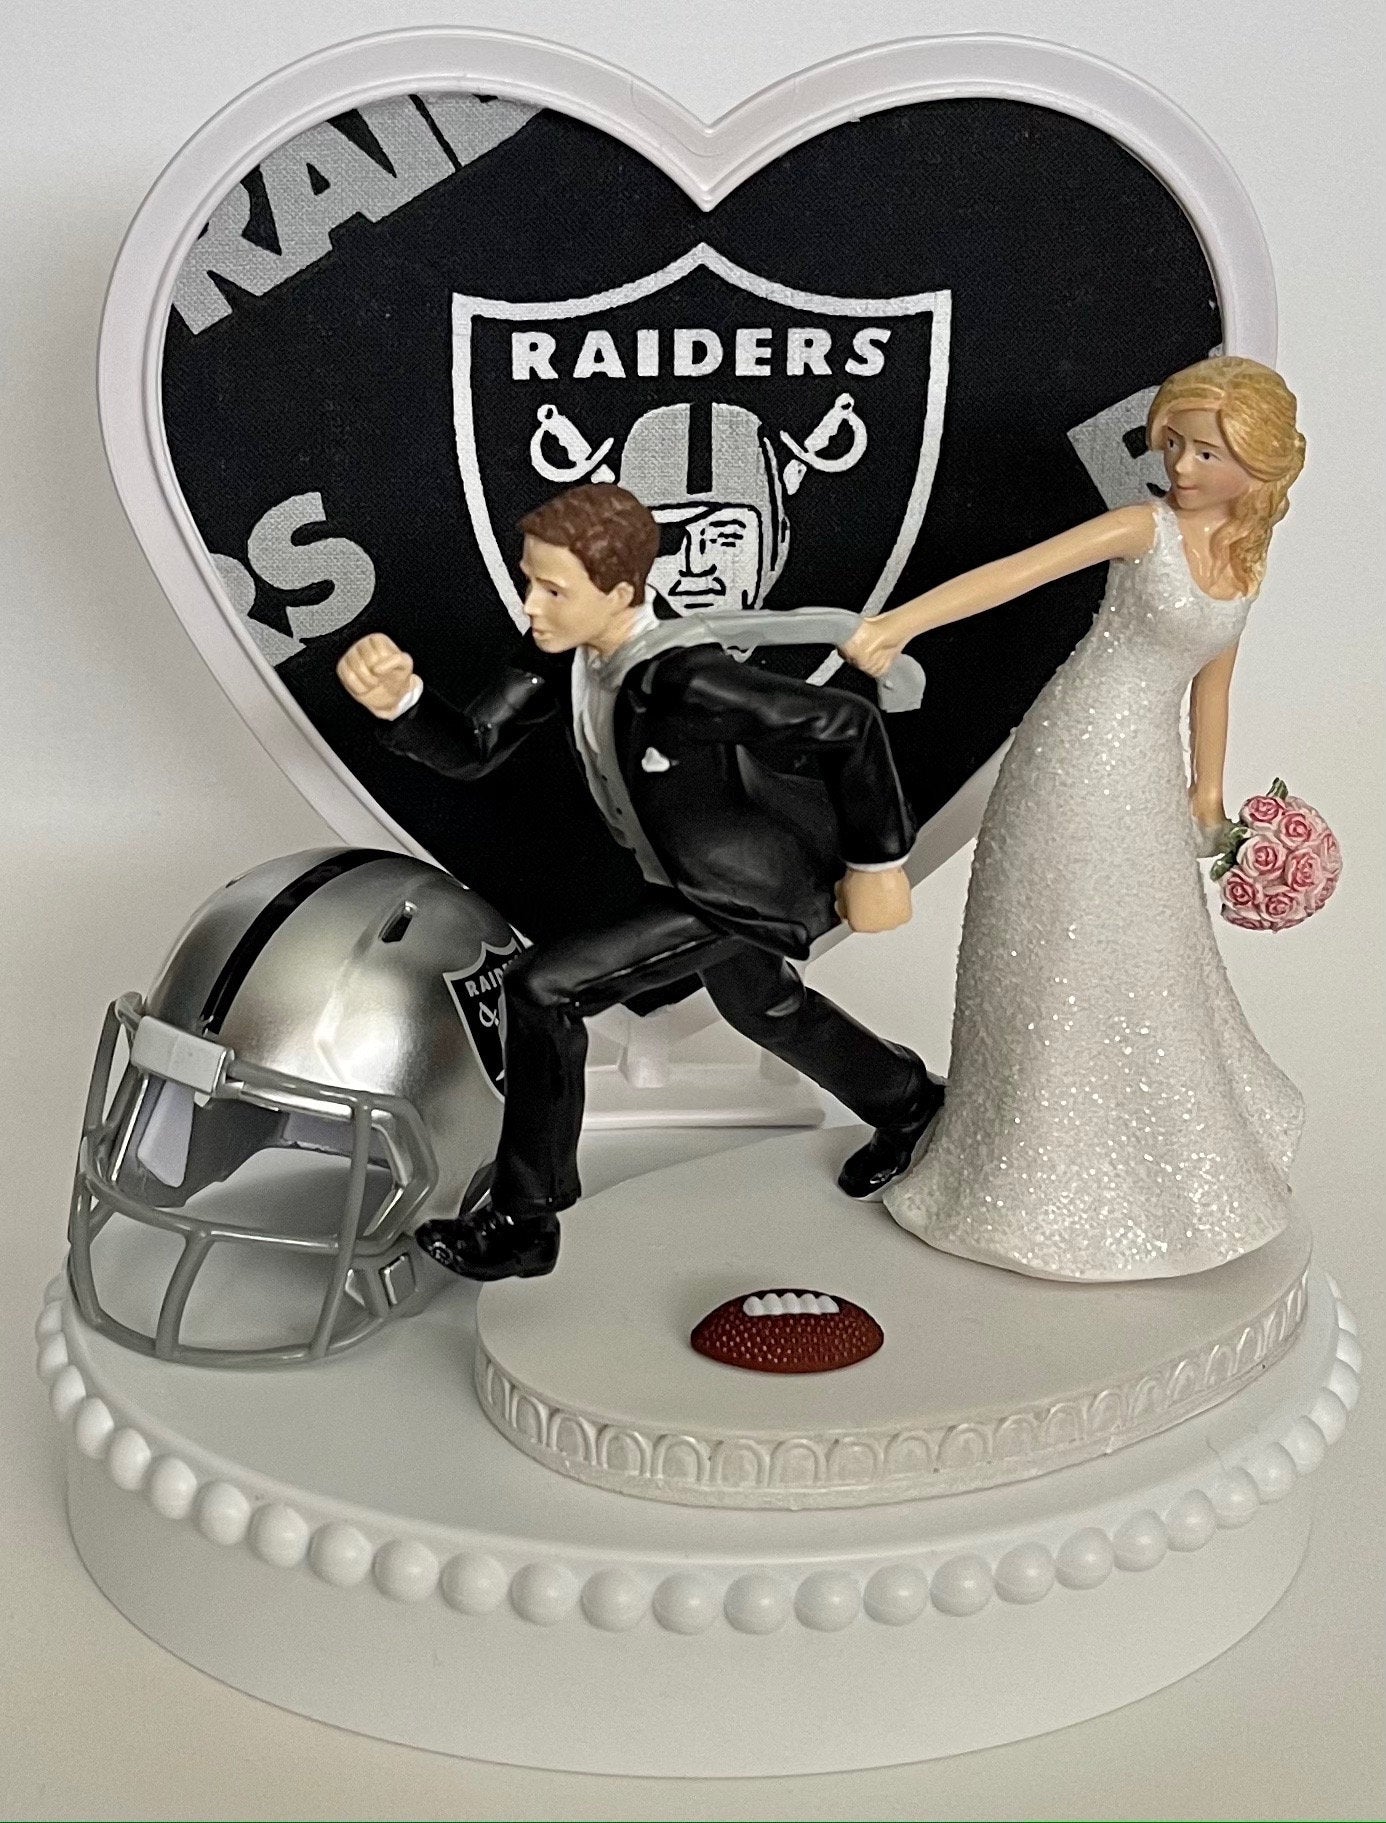 Wedding Cake Topper Las Vegas Raiders Football Themed Pulling Humorous Bride Groom Unique OOAK Funny Sports Fan Reception Groom's Cake Top